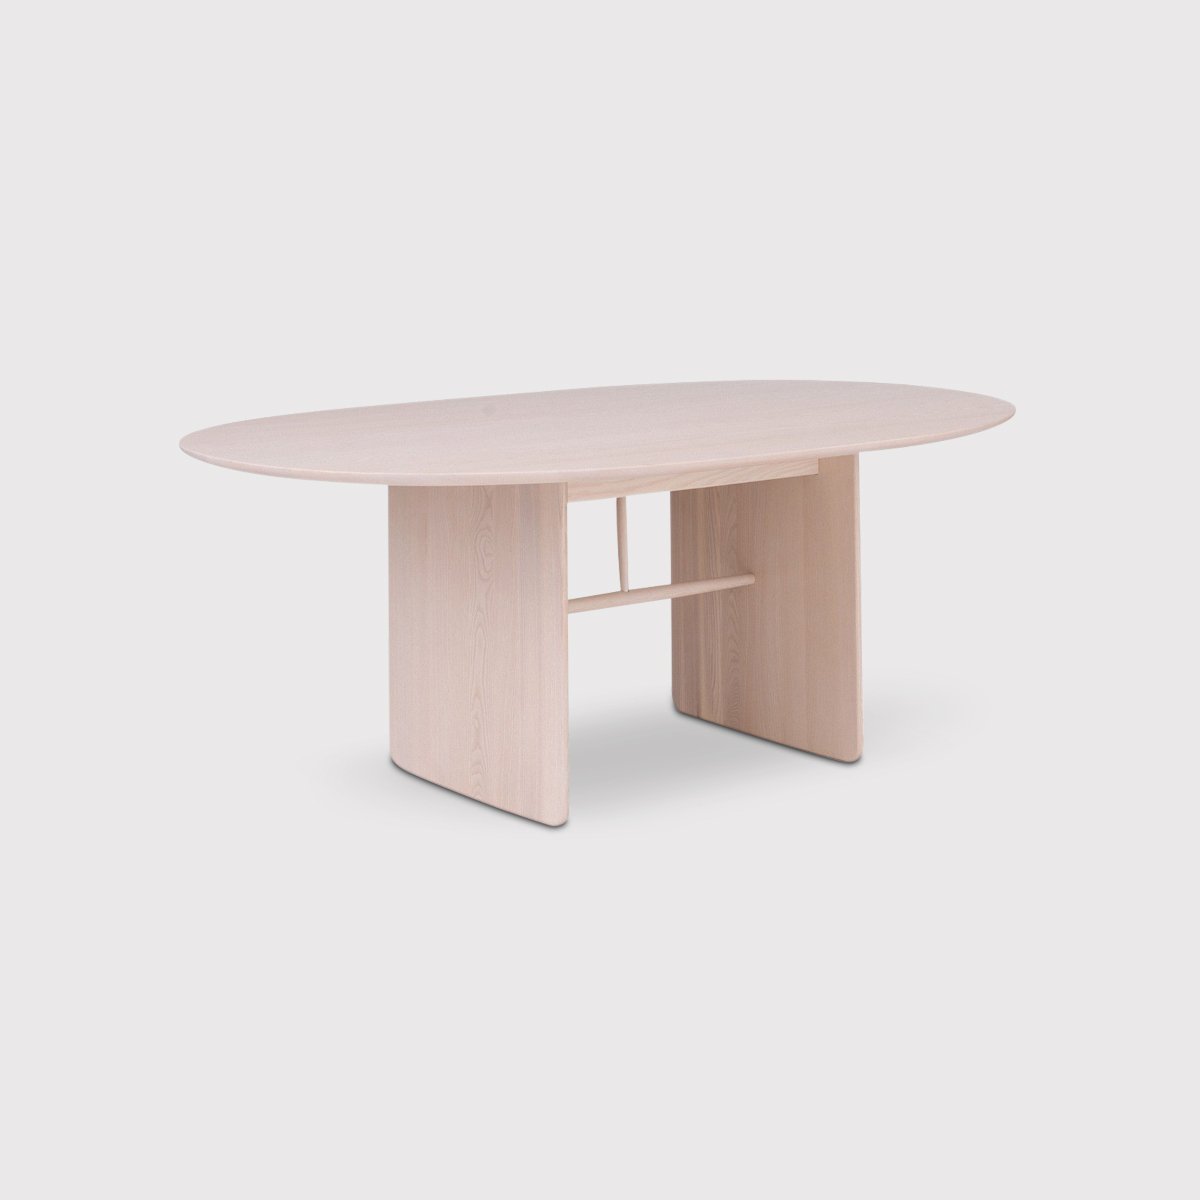 L.Ercolani Pennon Small Table, Neutral Wood | Barker & Stonehouse